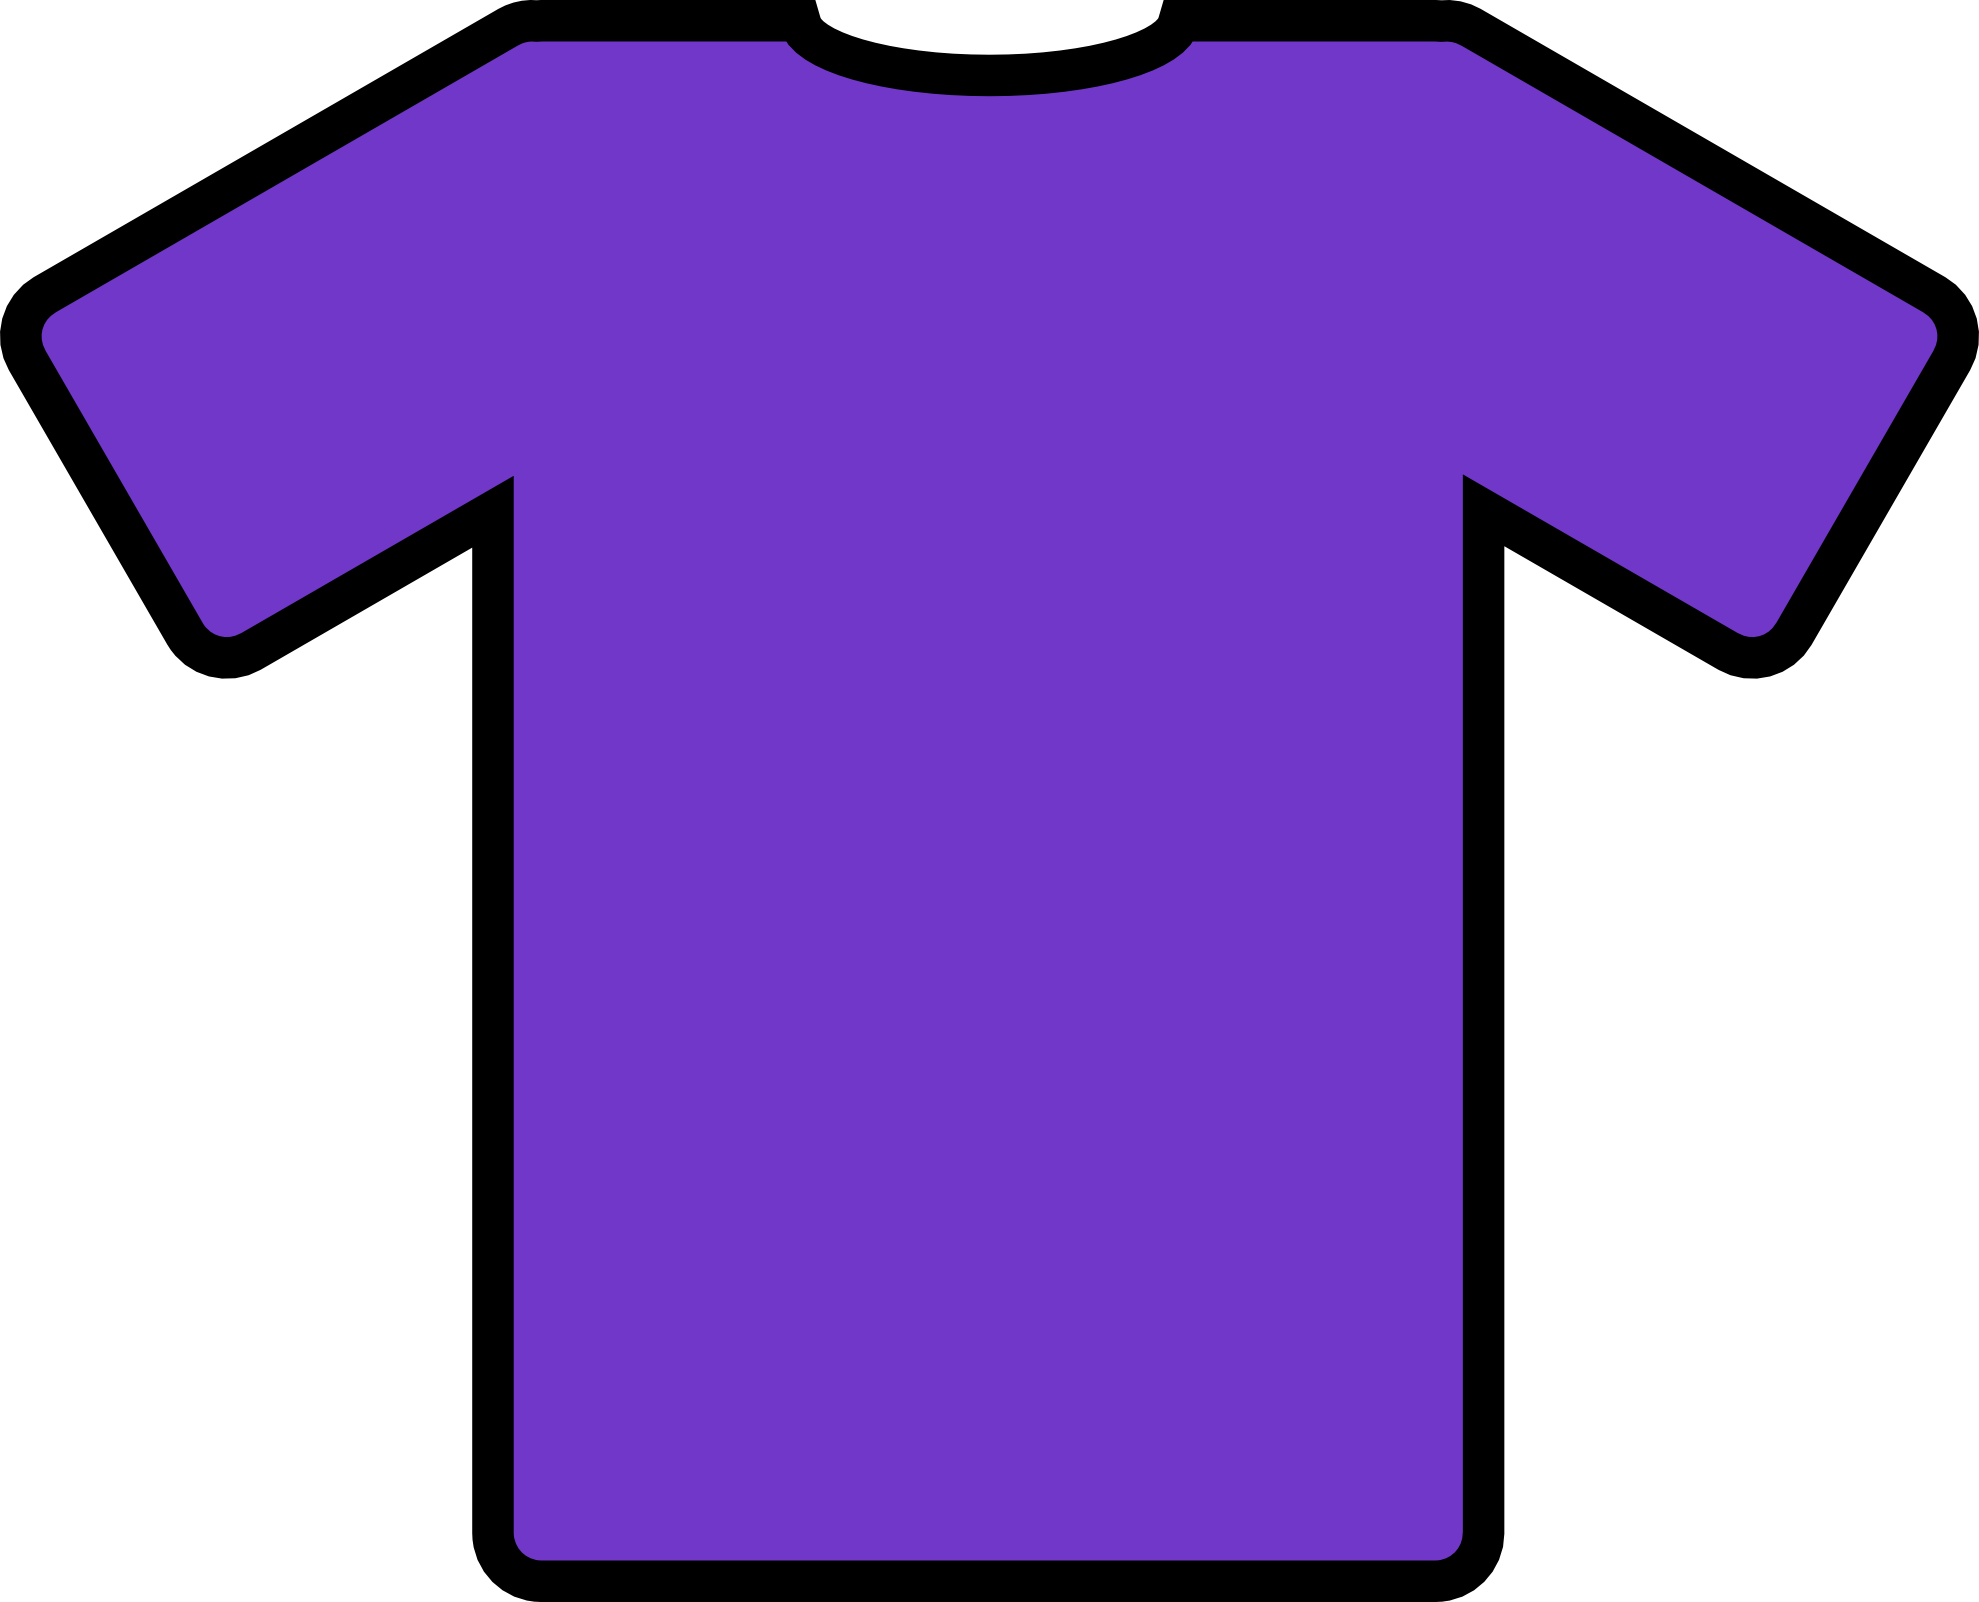 Panda free images shirtclipart. Shirt clipart purple shirt